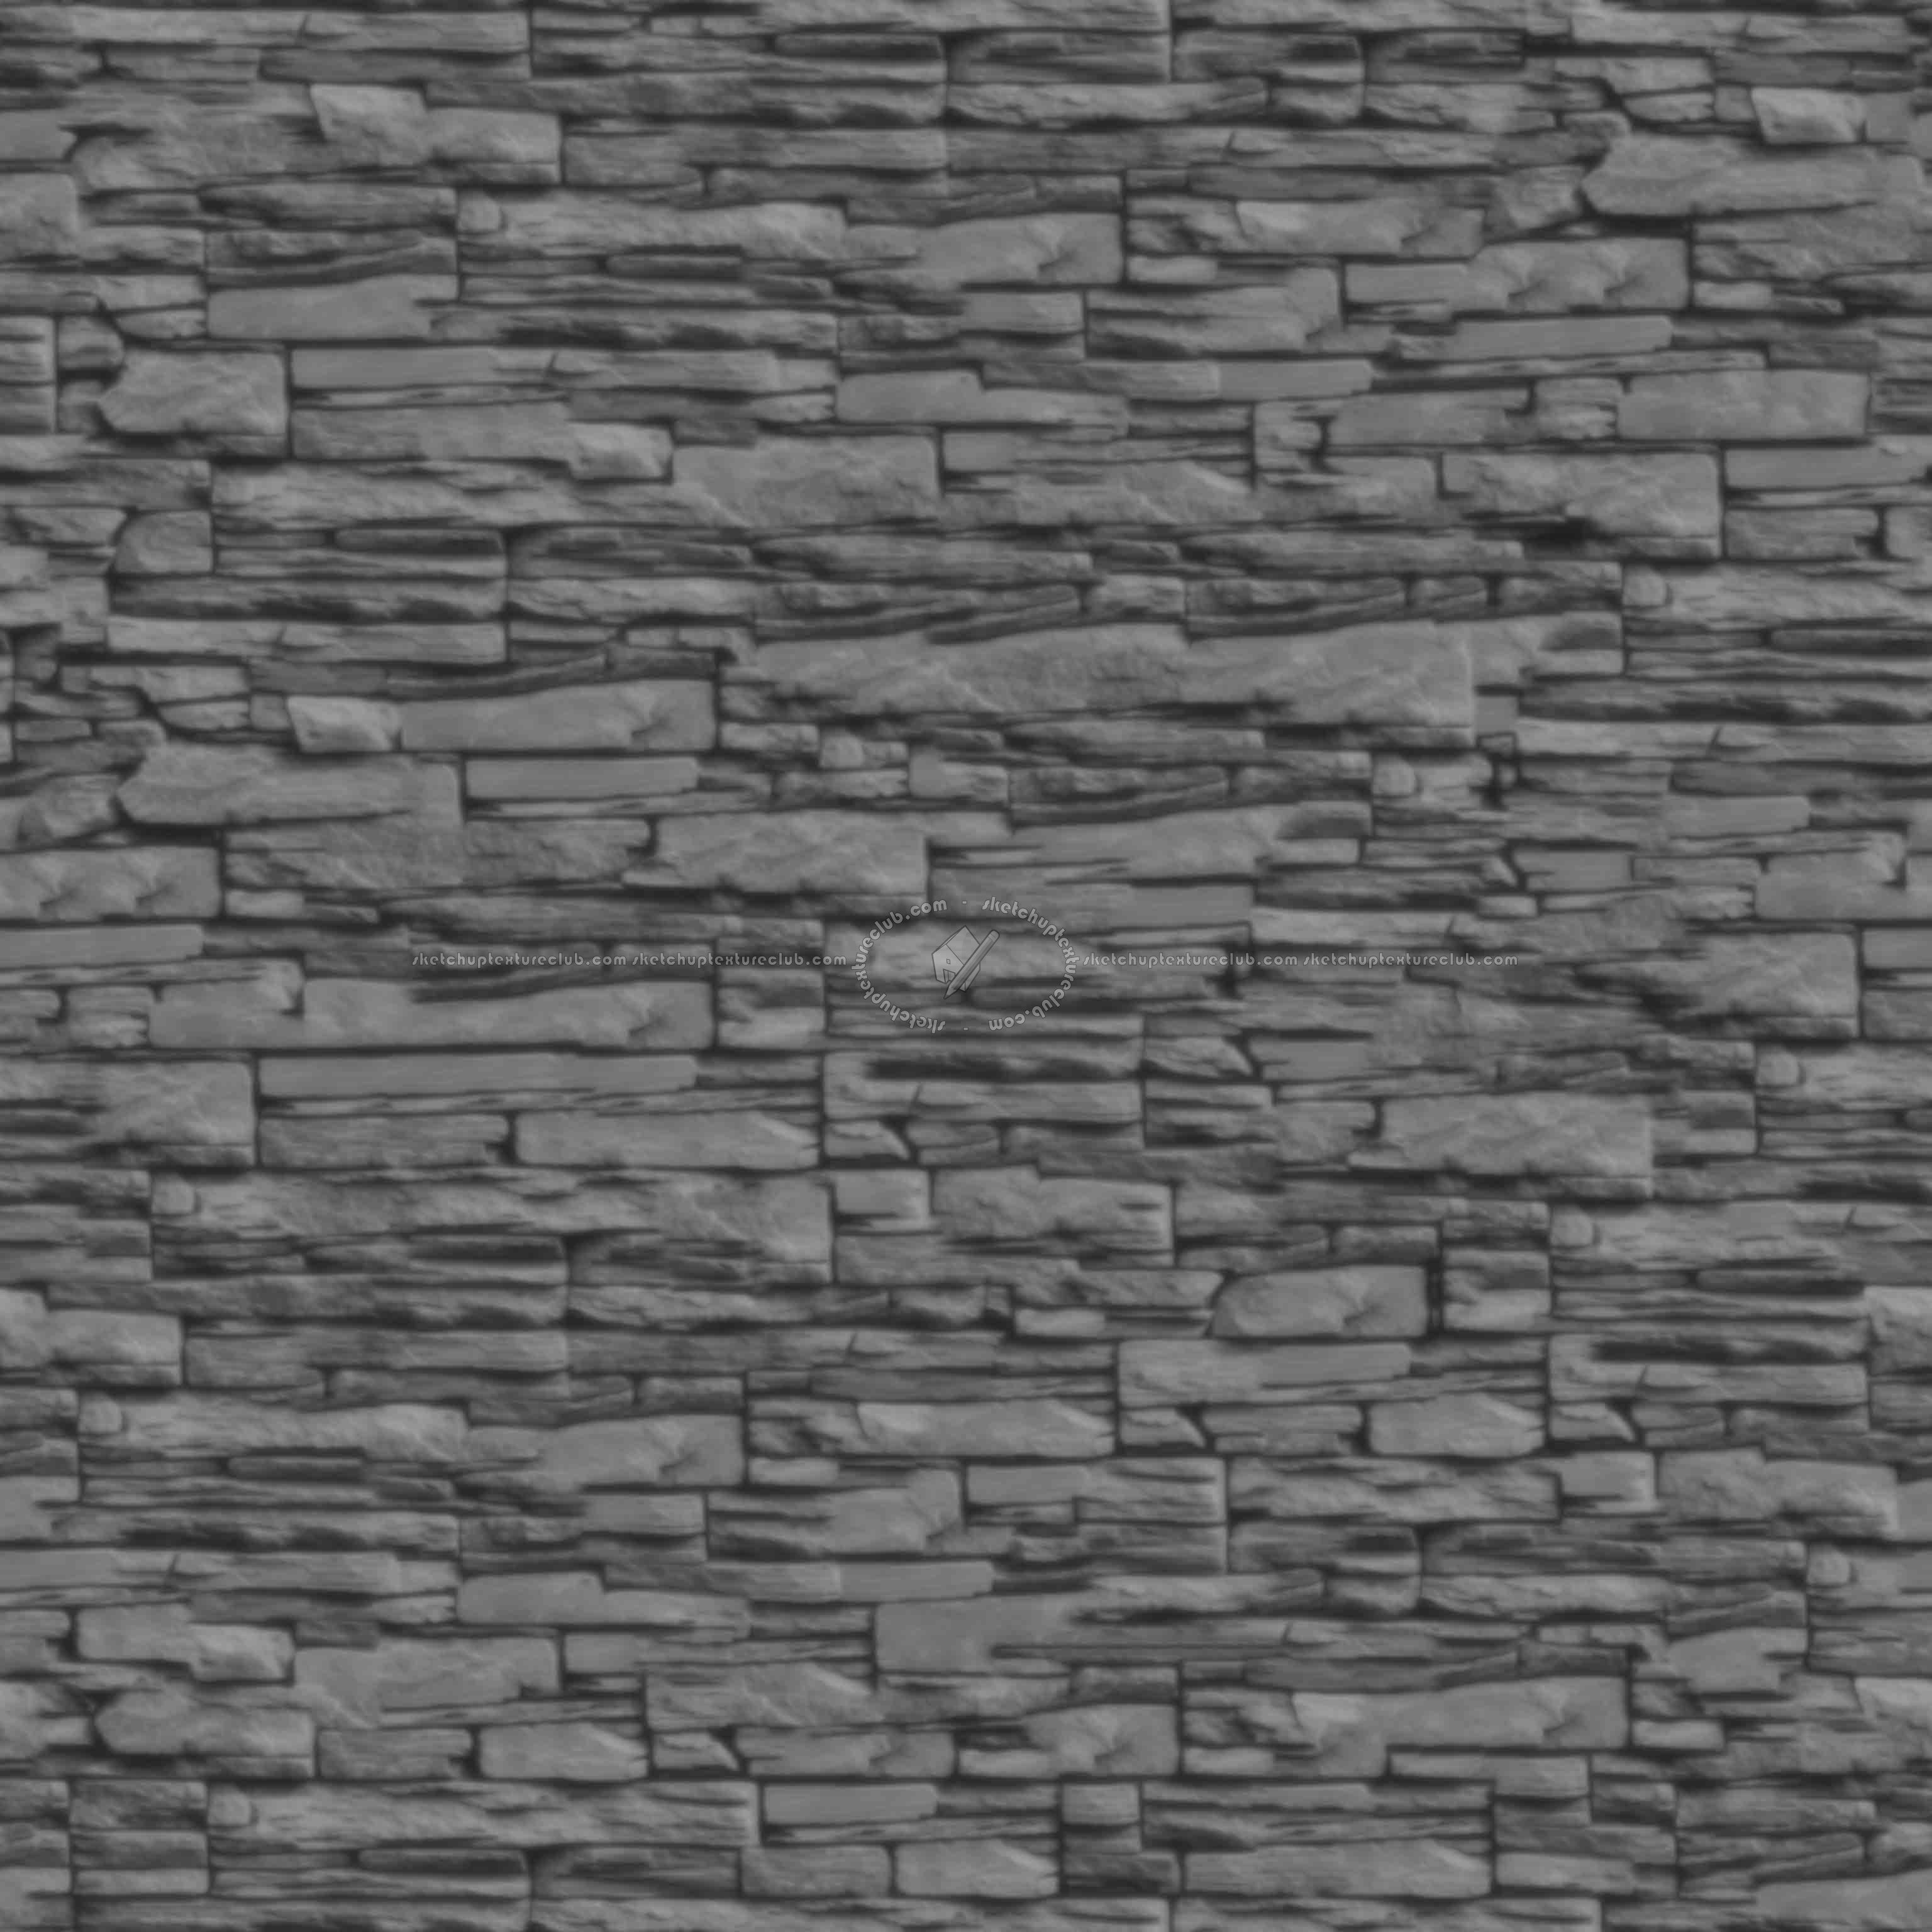 Minecraft stone texture